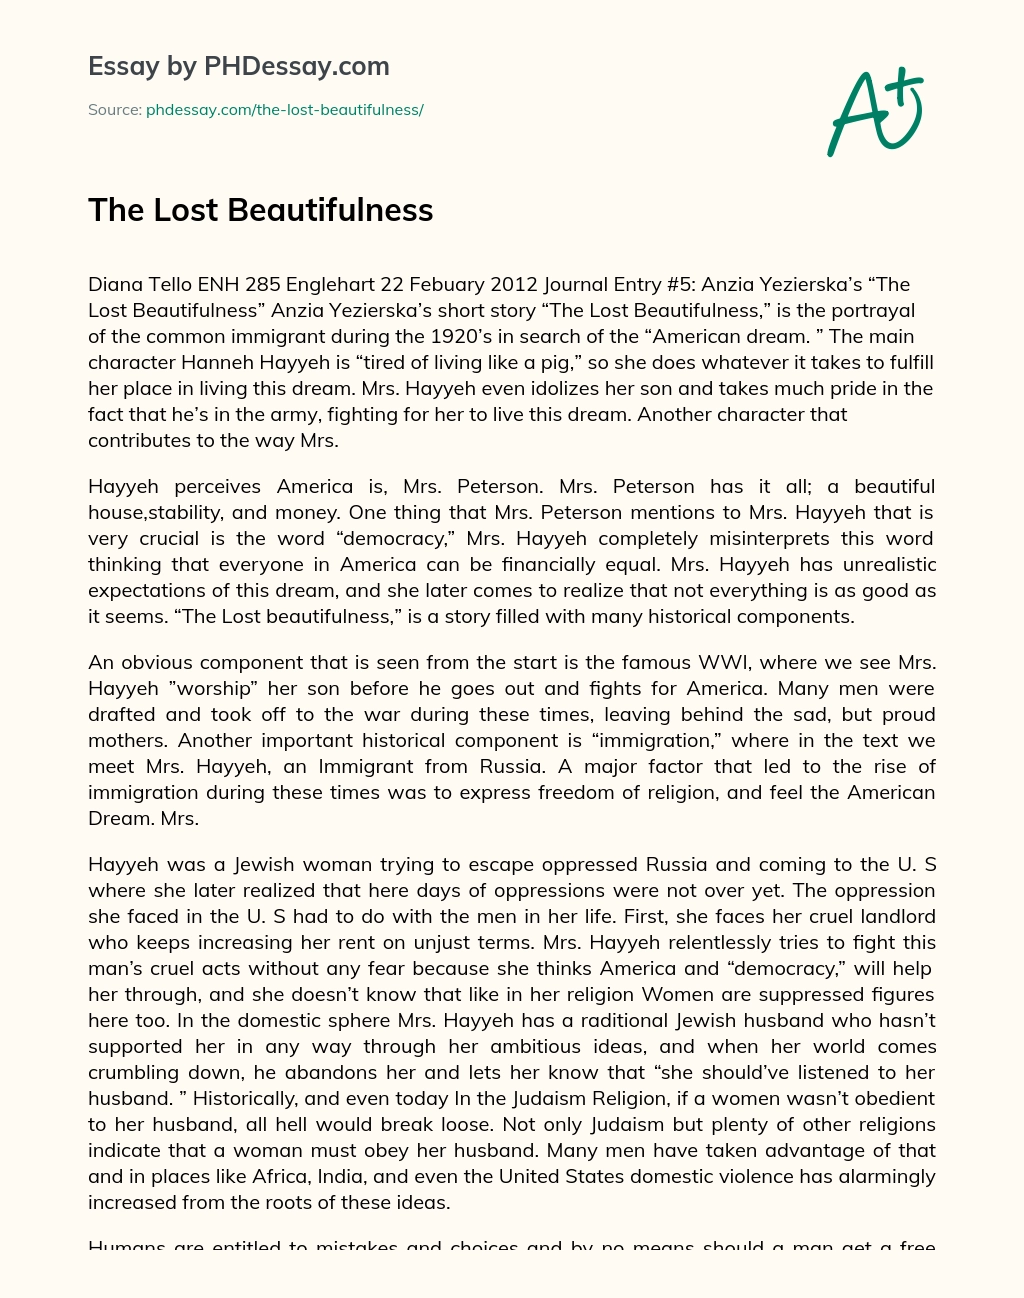 The Lost Beautifulness essay